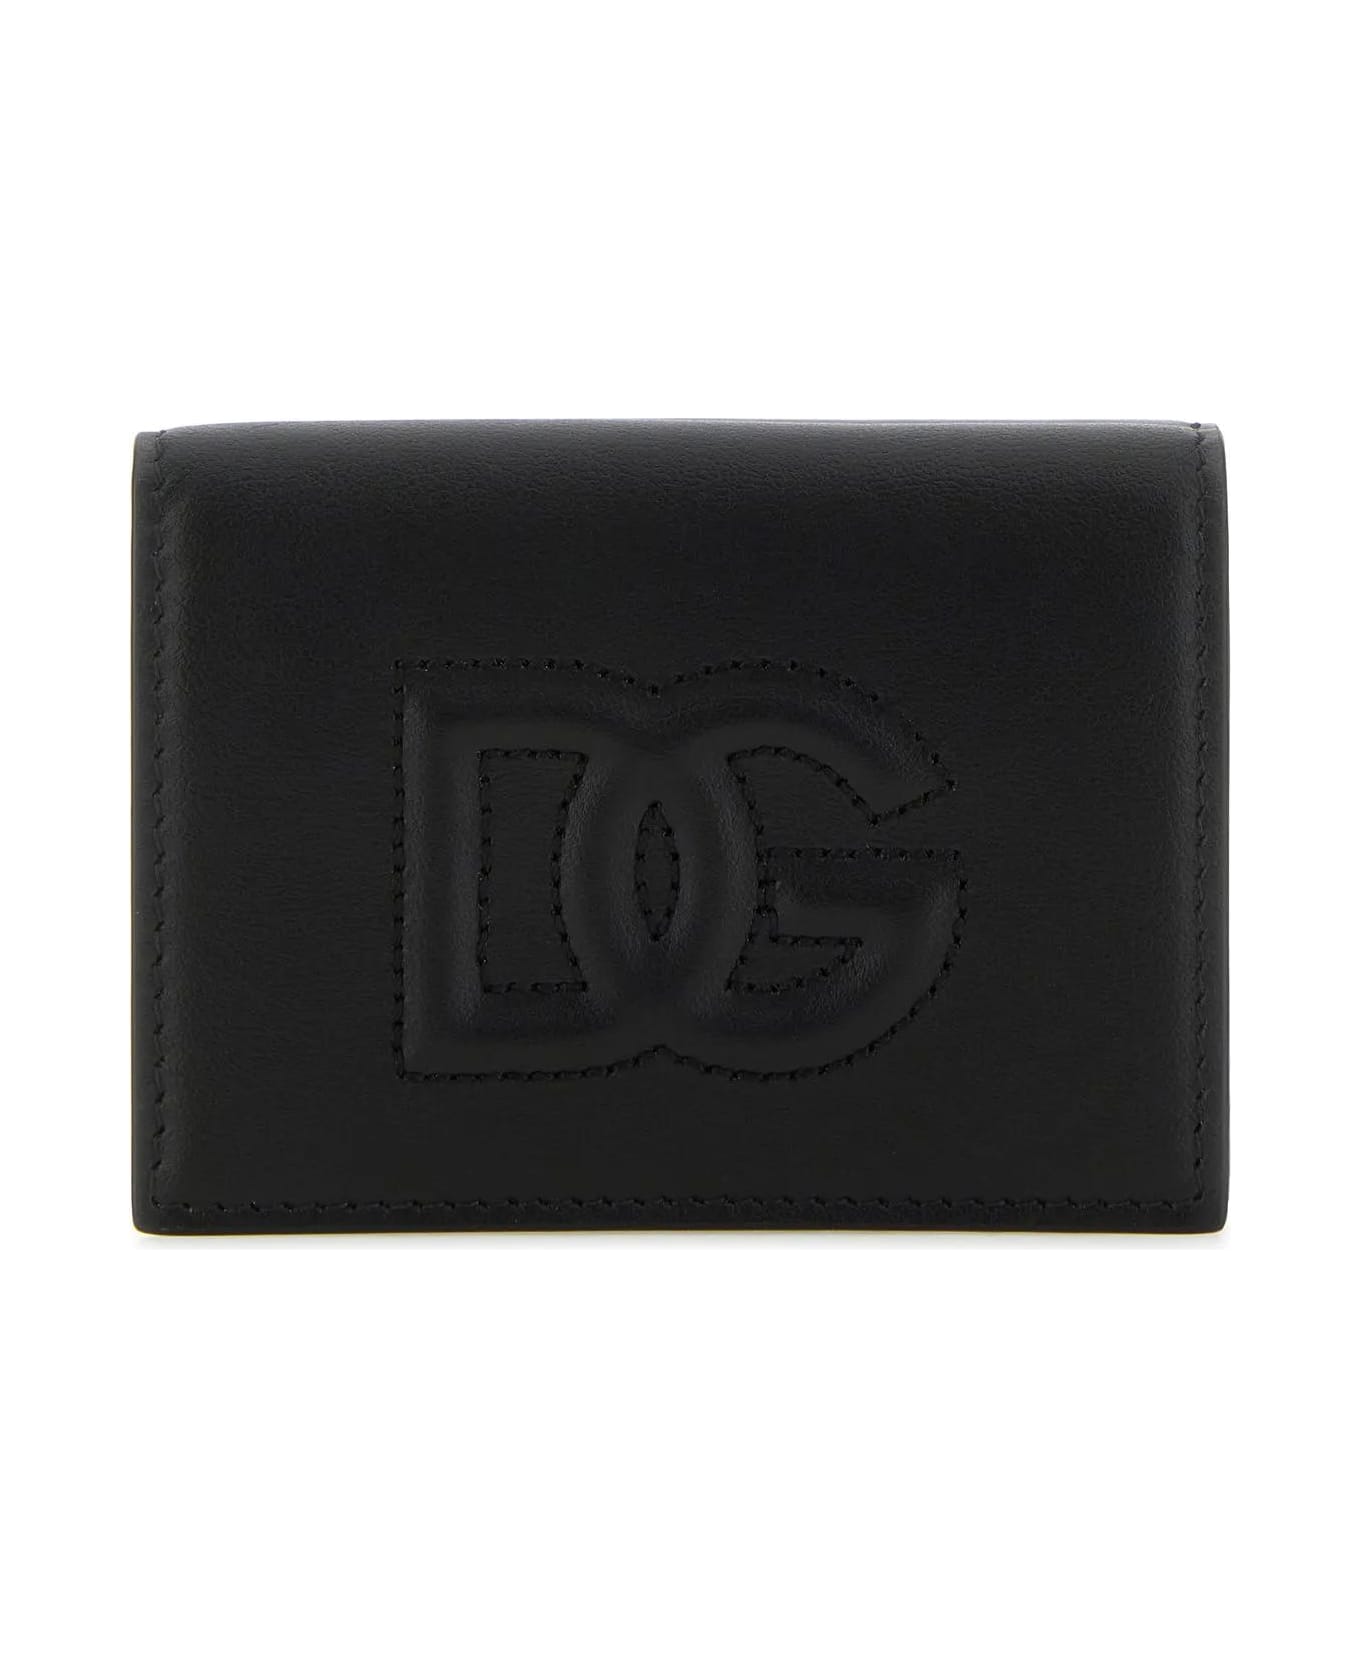 Dolce & Gabbana Black Leather Wallet - Black 財布